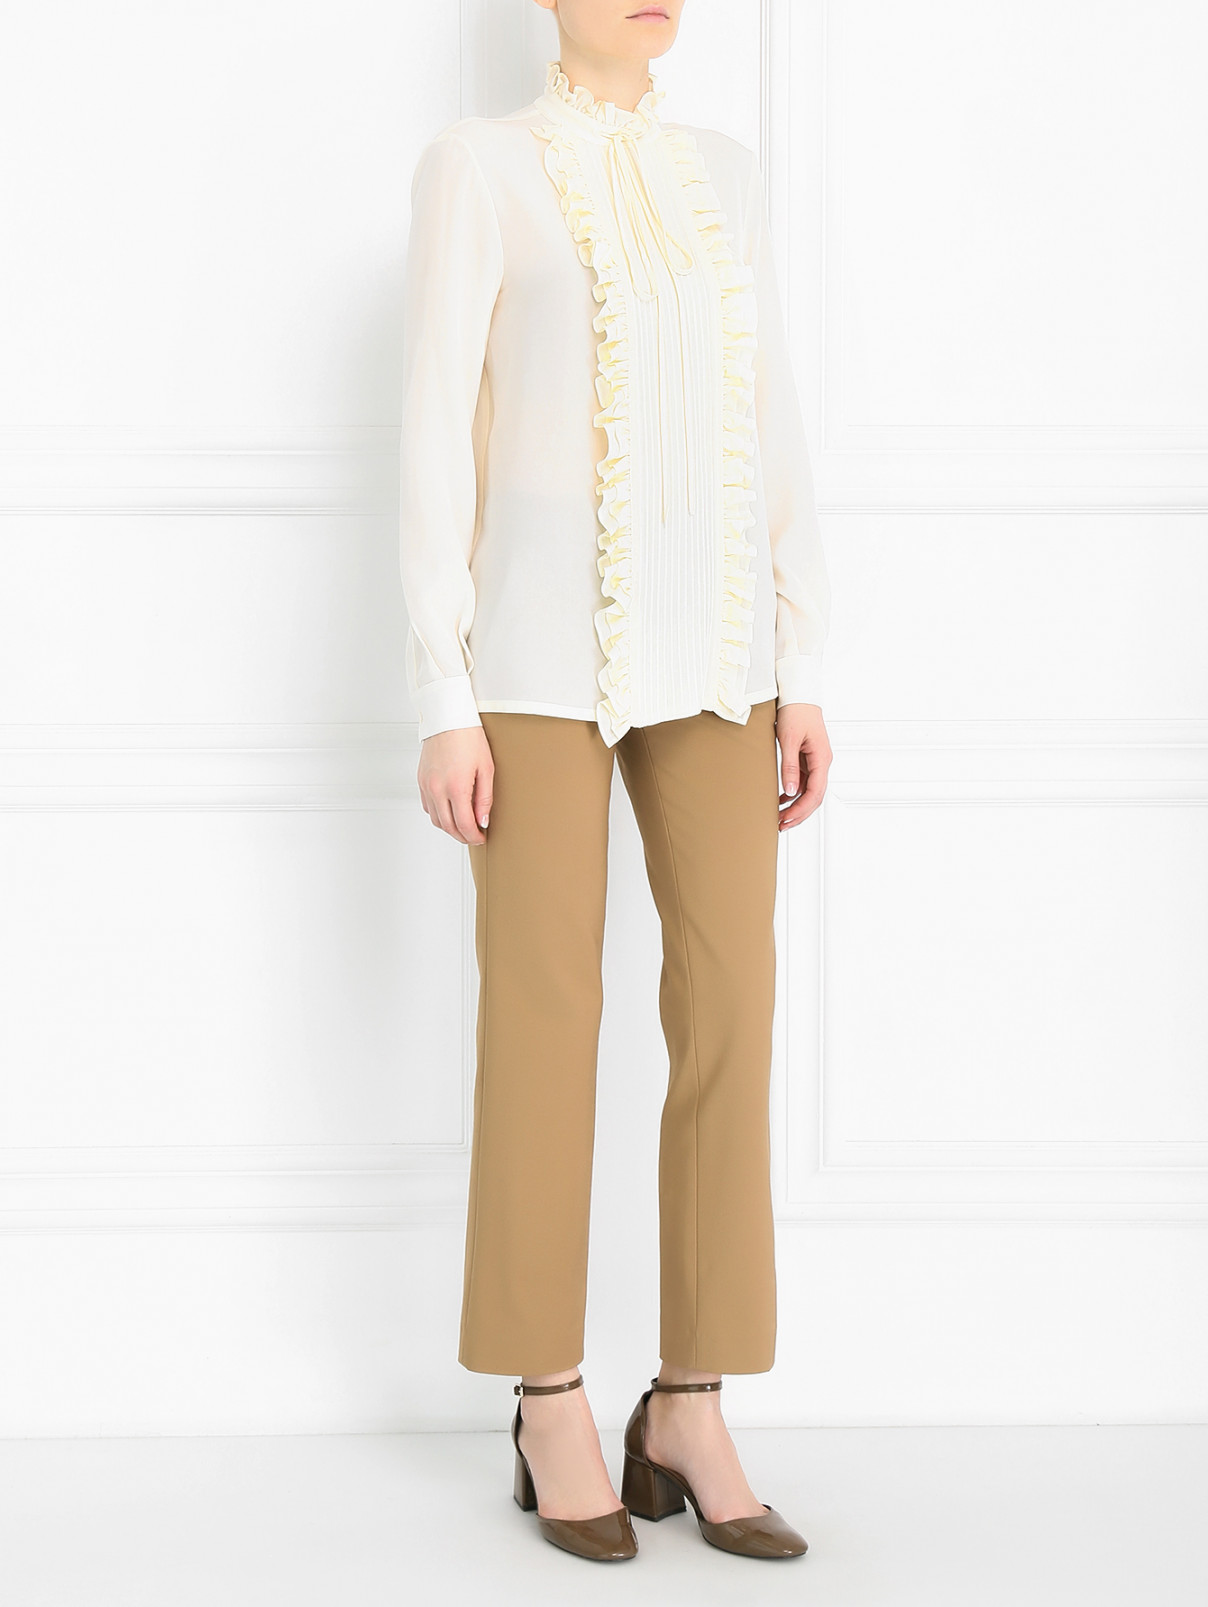 Блуза из шелка Stella Jean  –  Модель Общий вид  – Цвет:  Бежевый